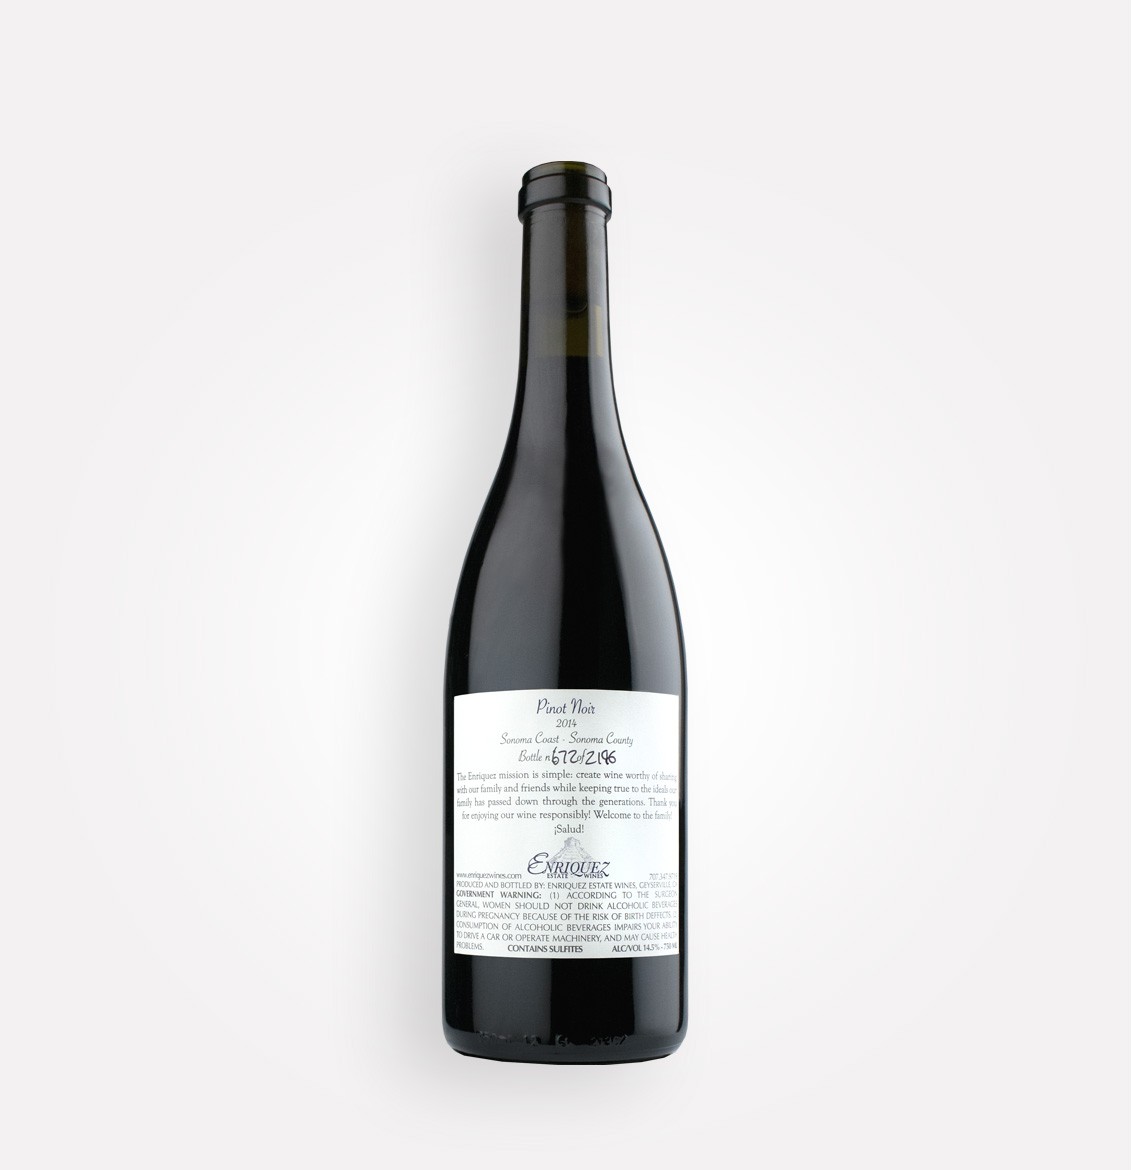 Back bottle view of Enriquez 2014 Pinot Noir wine from California’s Sonoma Coast